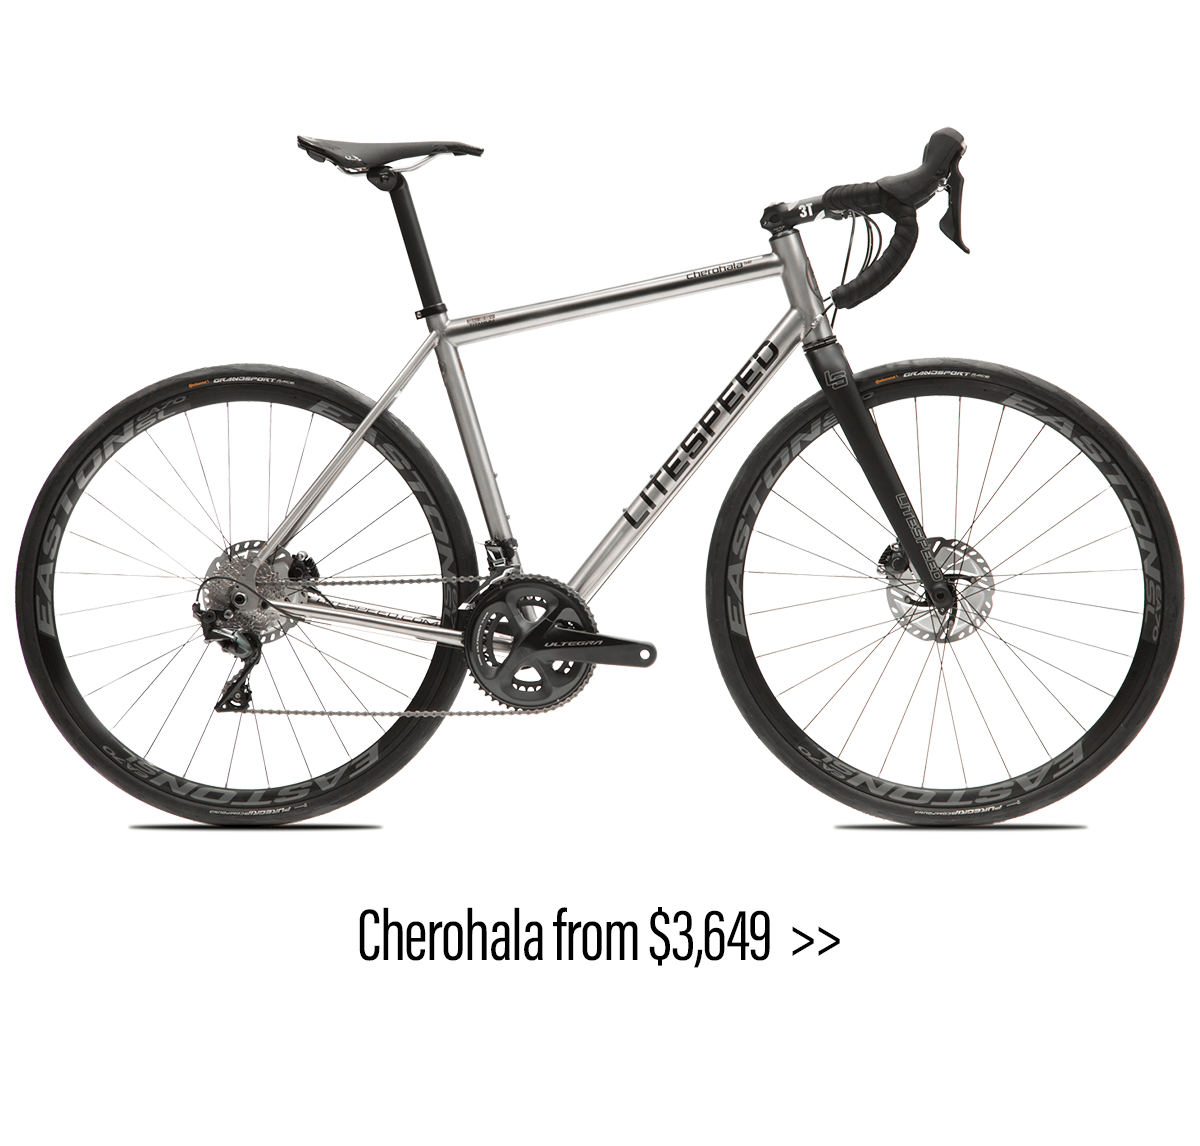 Cherohala bike from $3,649.